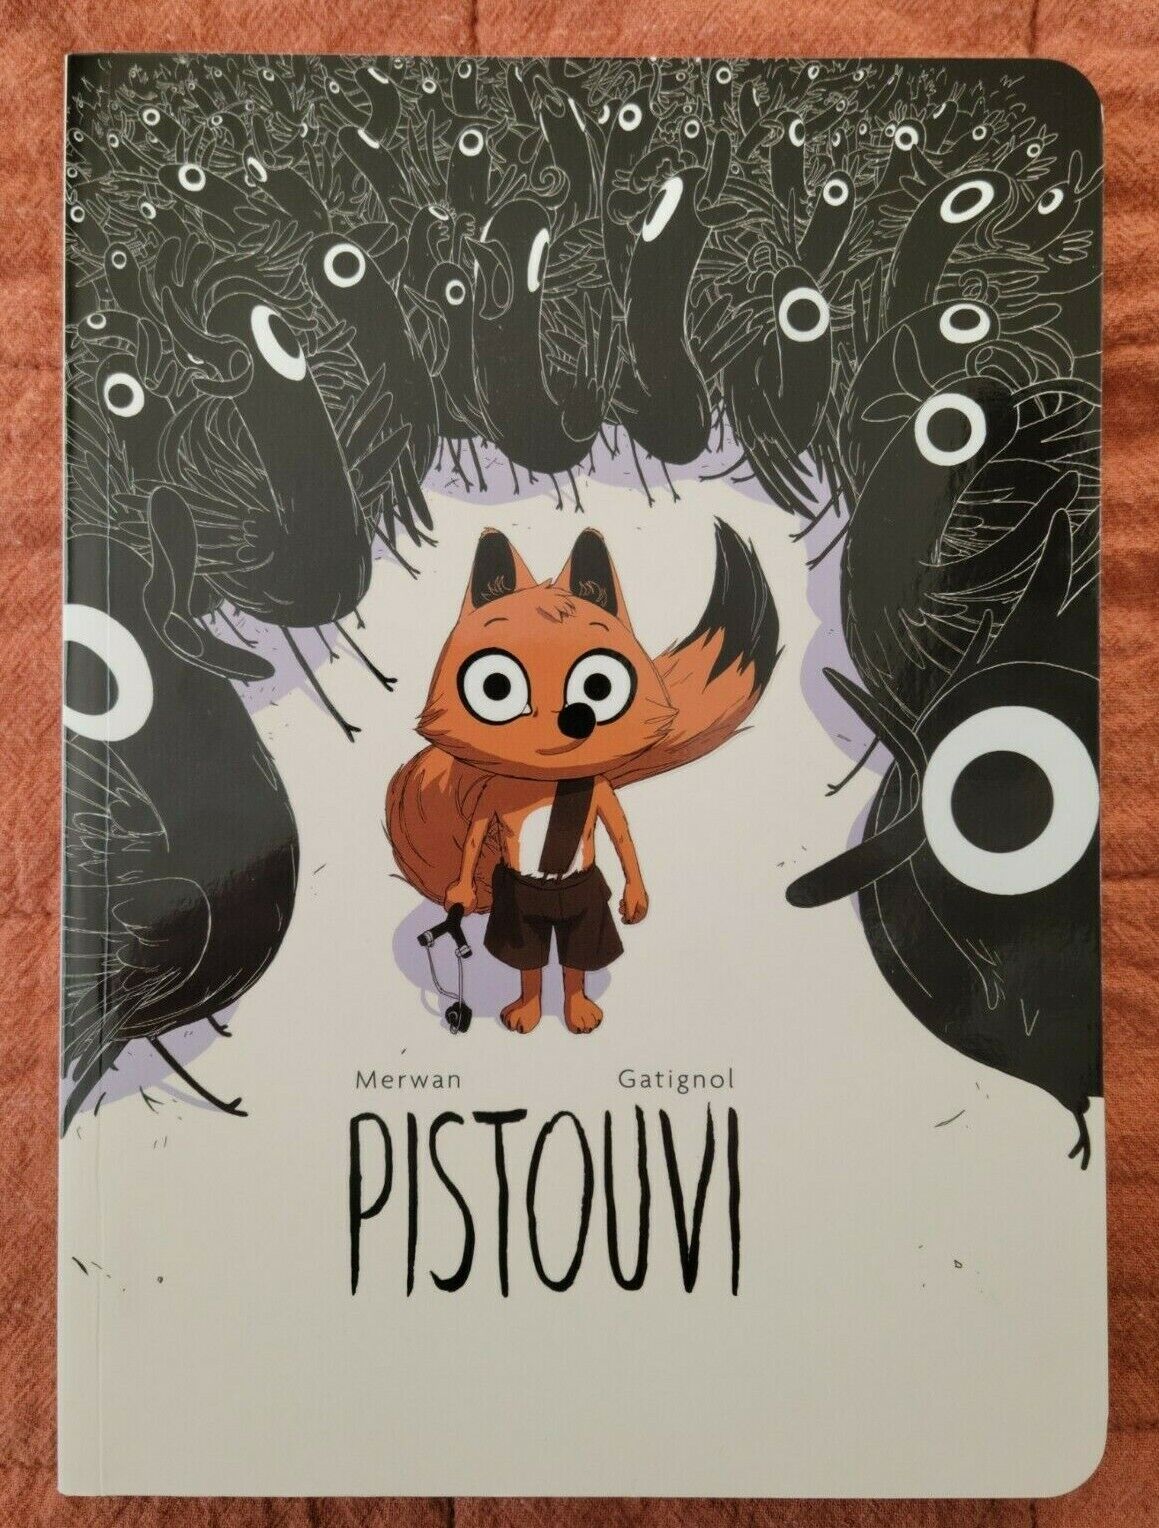 Pistouvi by Merwan and Gatignol (Magnetic Press, Paperback, English)